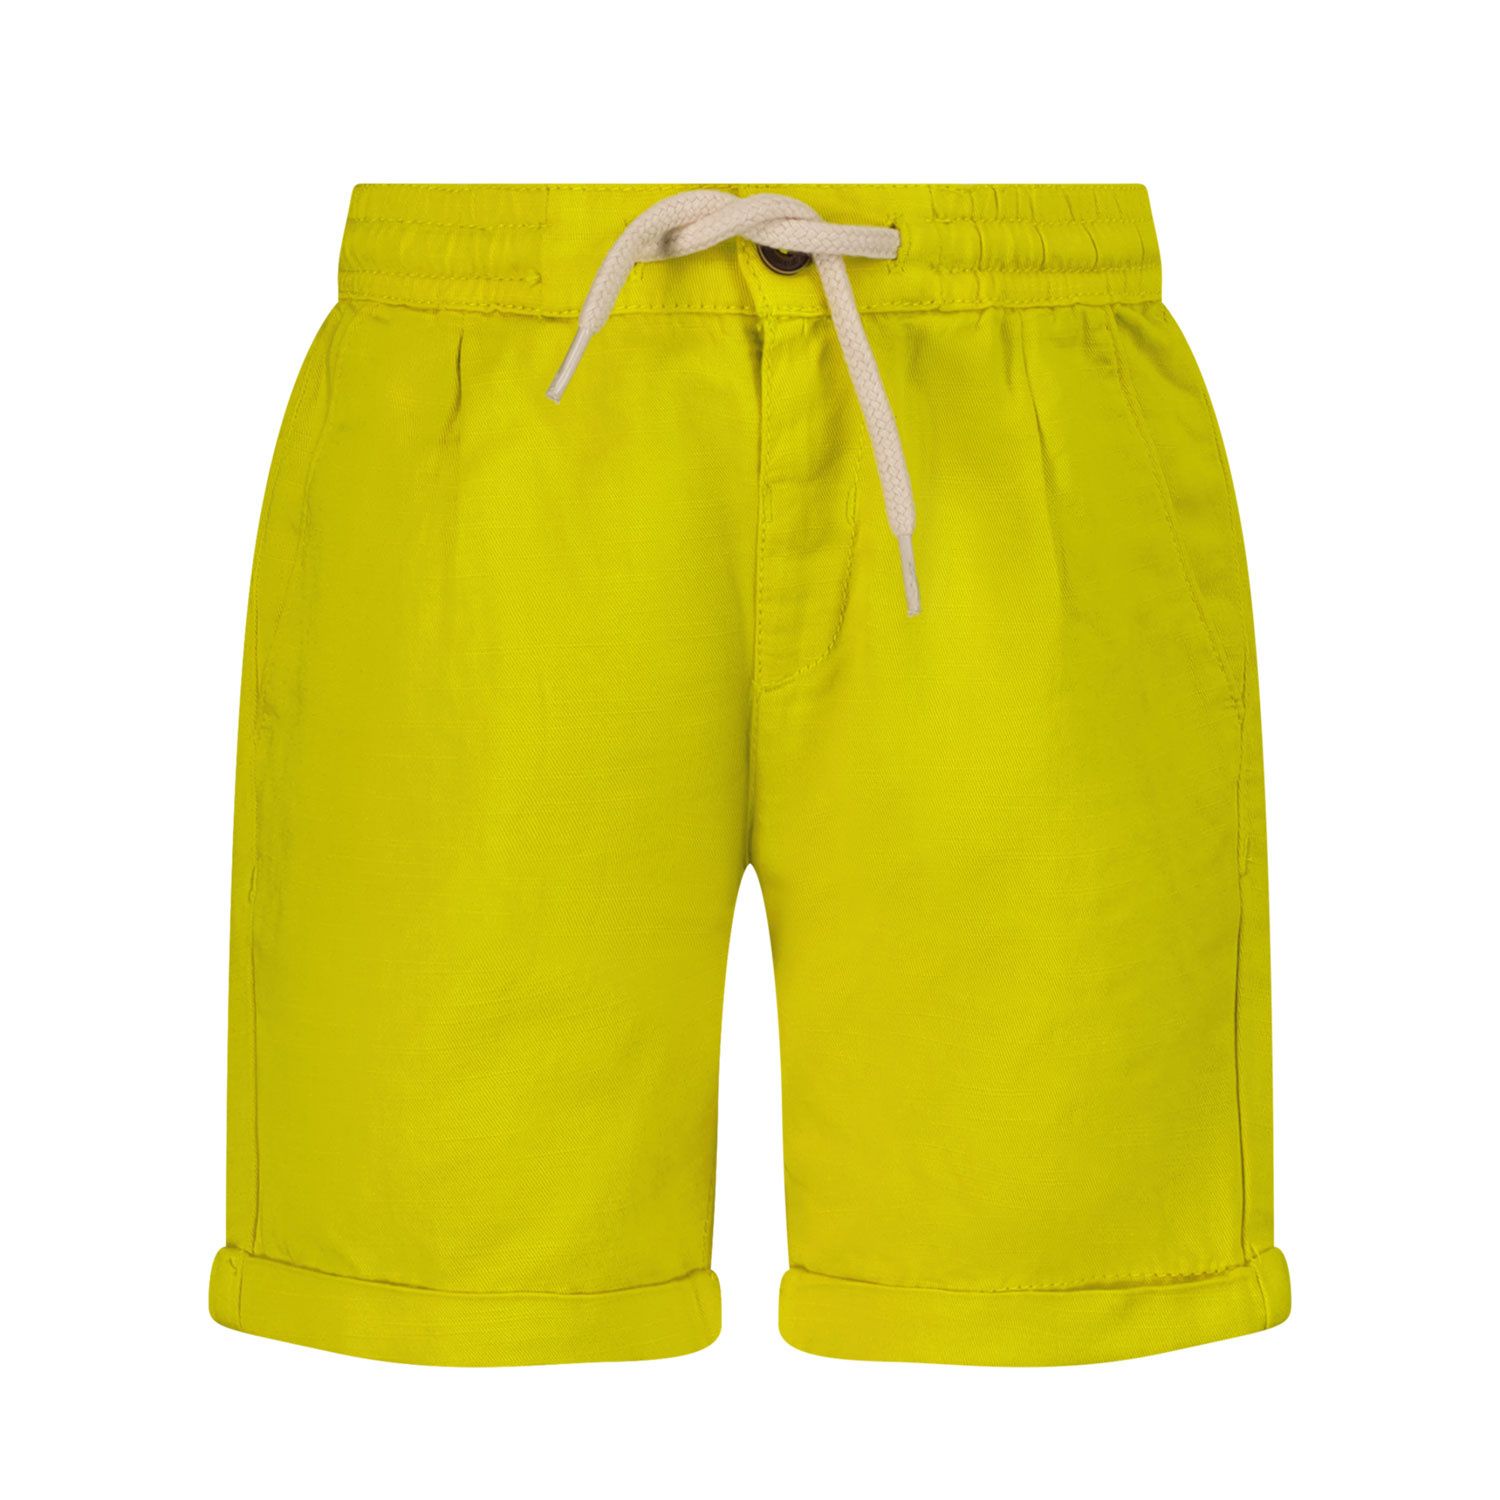 Afbeelding van Mayoral 1220 baby shorts geel